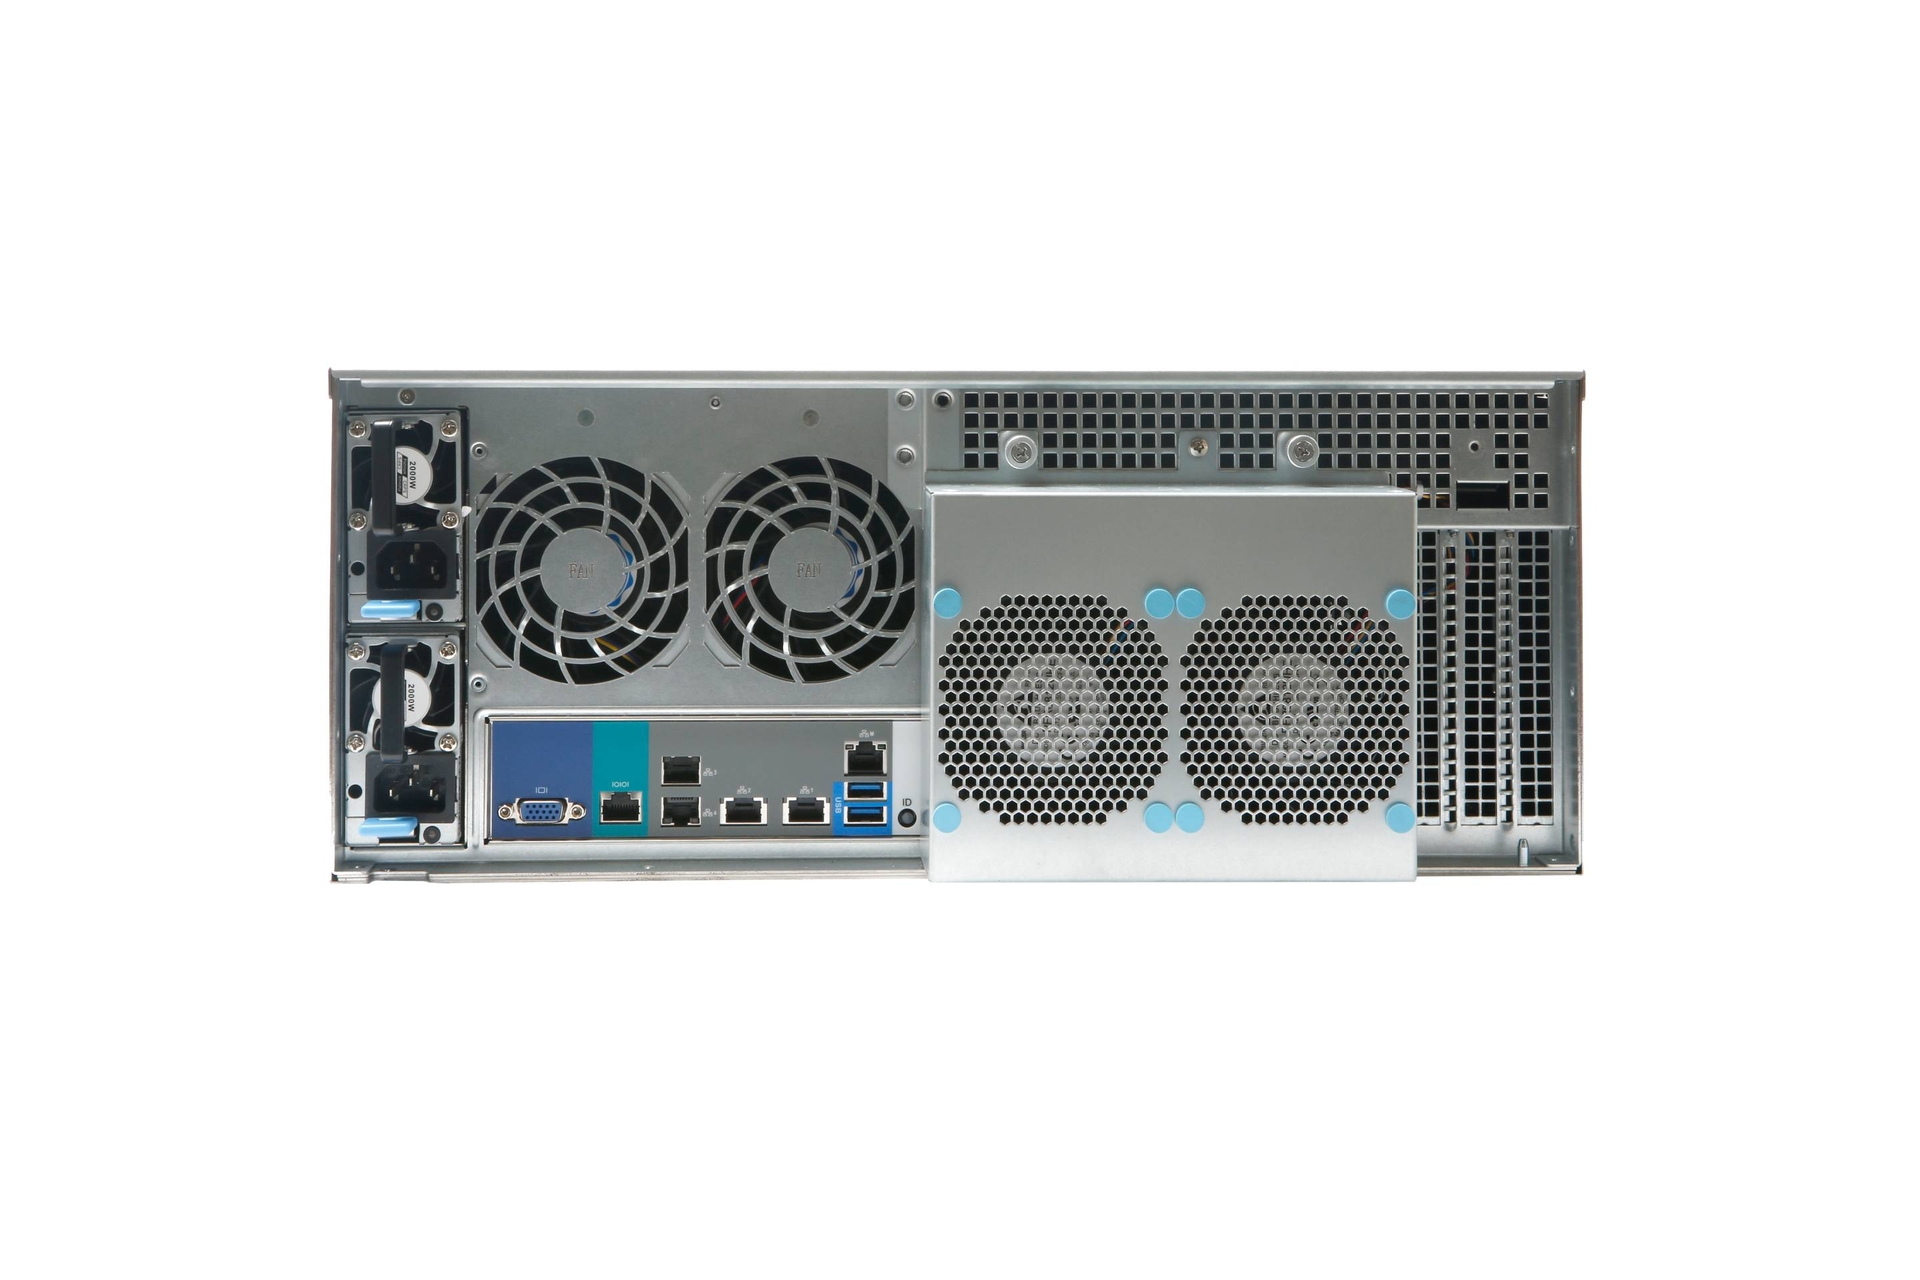 ZOTAC 4U Dual Intel CPU Rack Mount GPU Server (barebone) - ZRS-3200M4